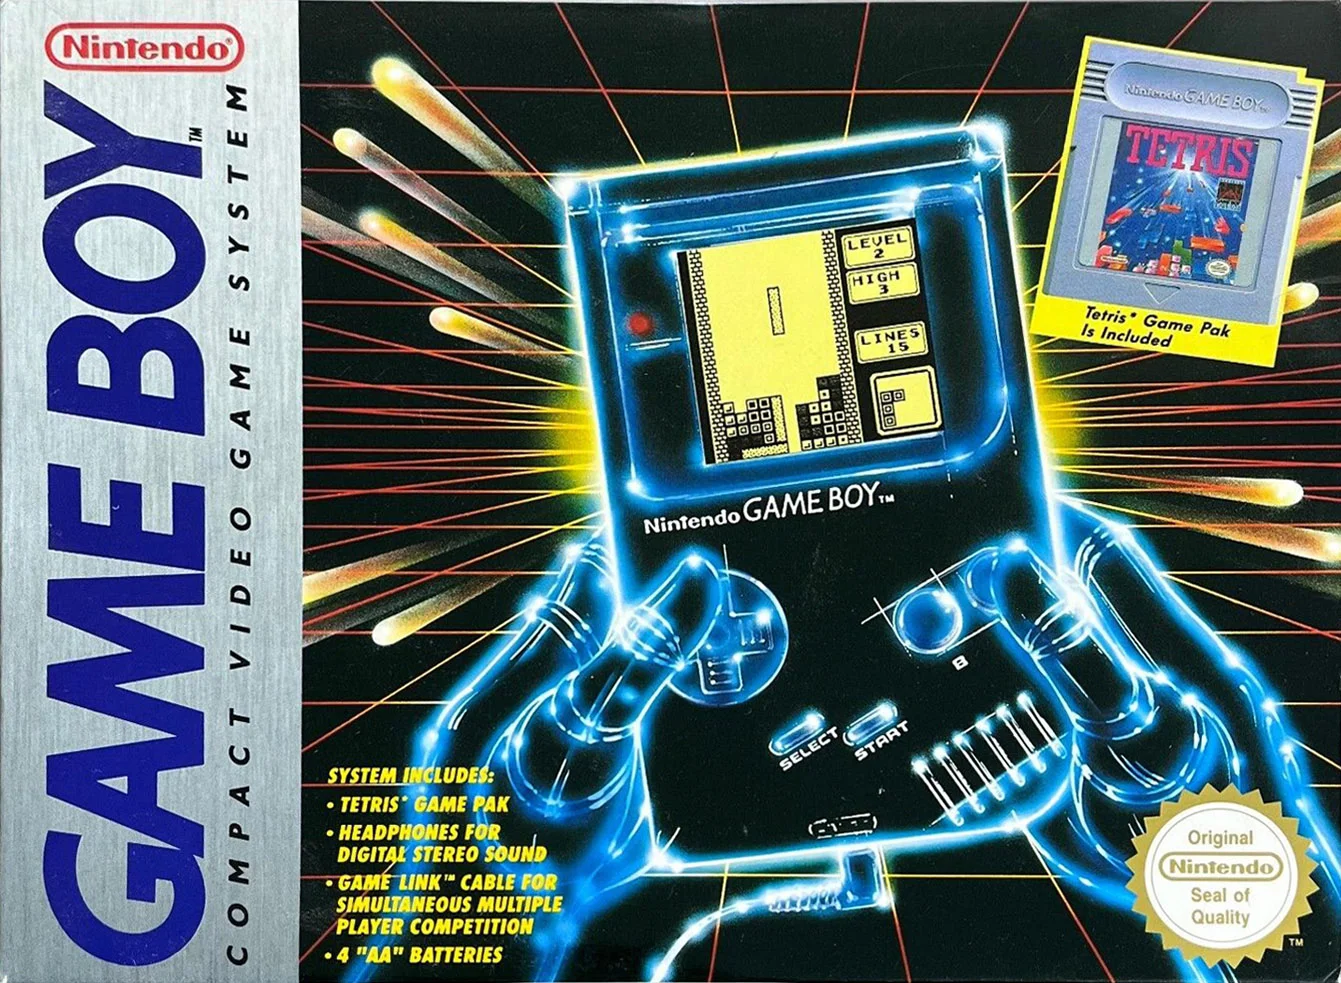  Nintendo Game Boy Bandai Console [UK]